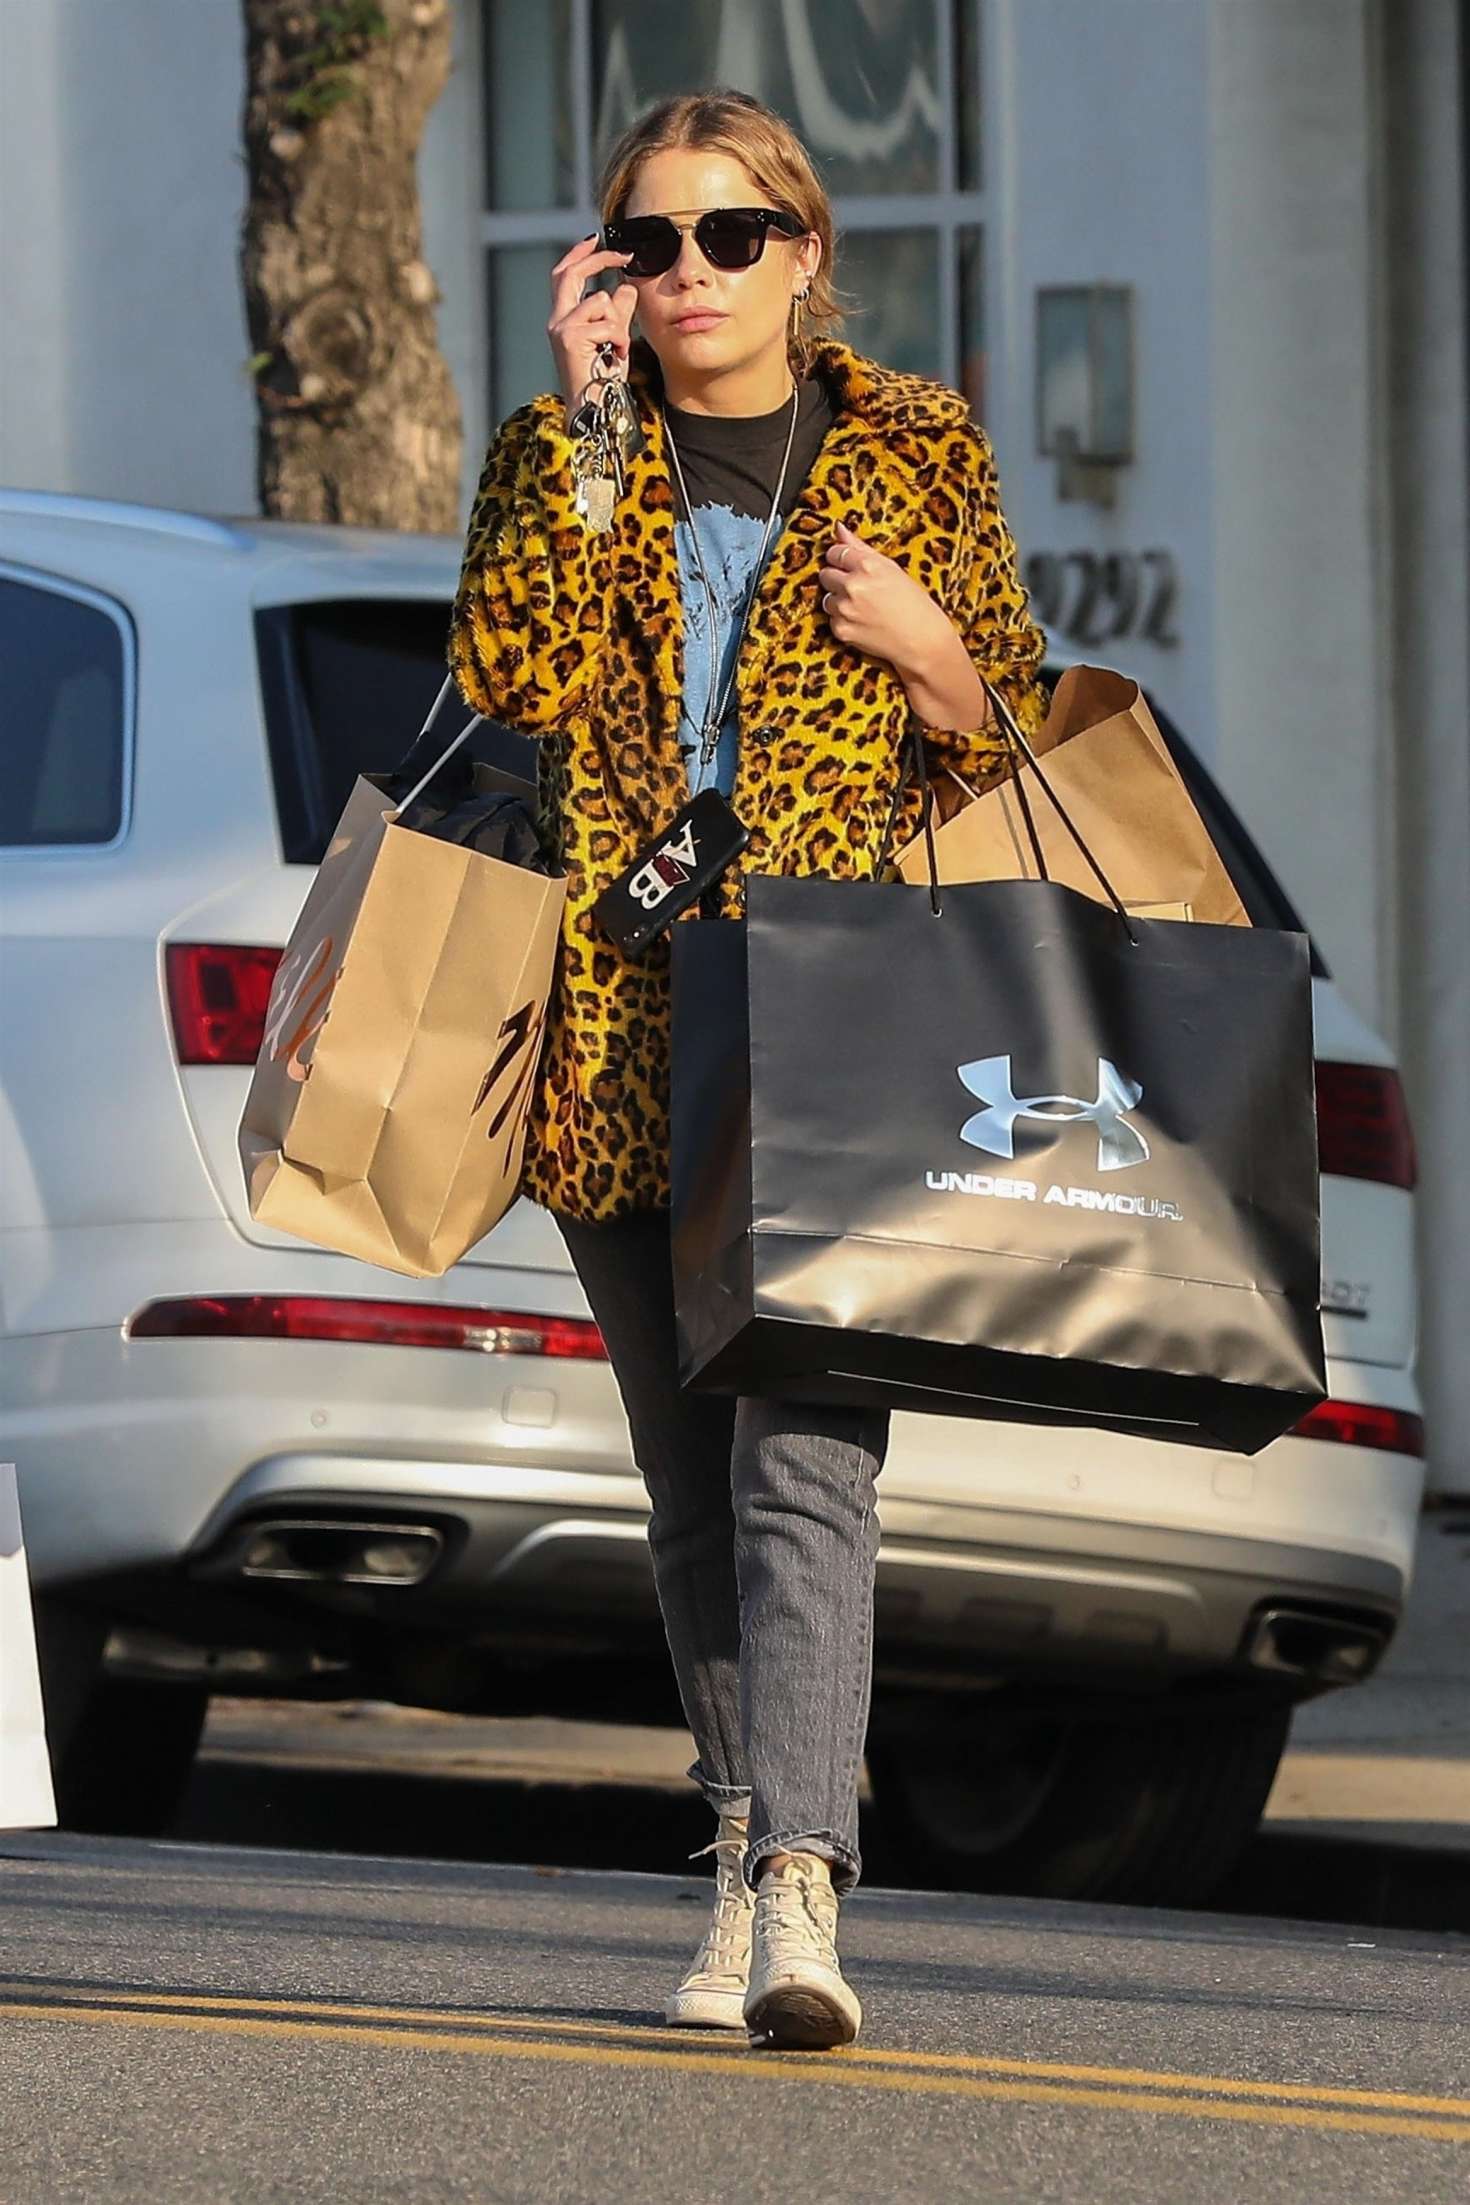 Ashley Benson in Animal Print Jacket â€“ Shopping in Beverly Hills